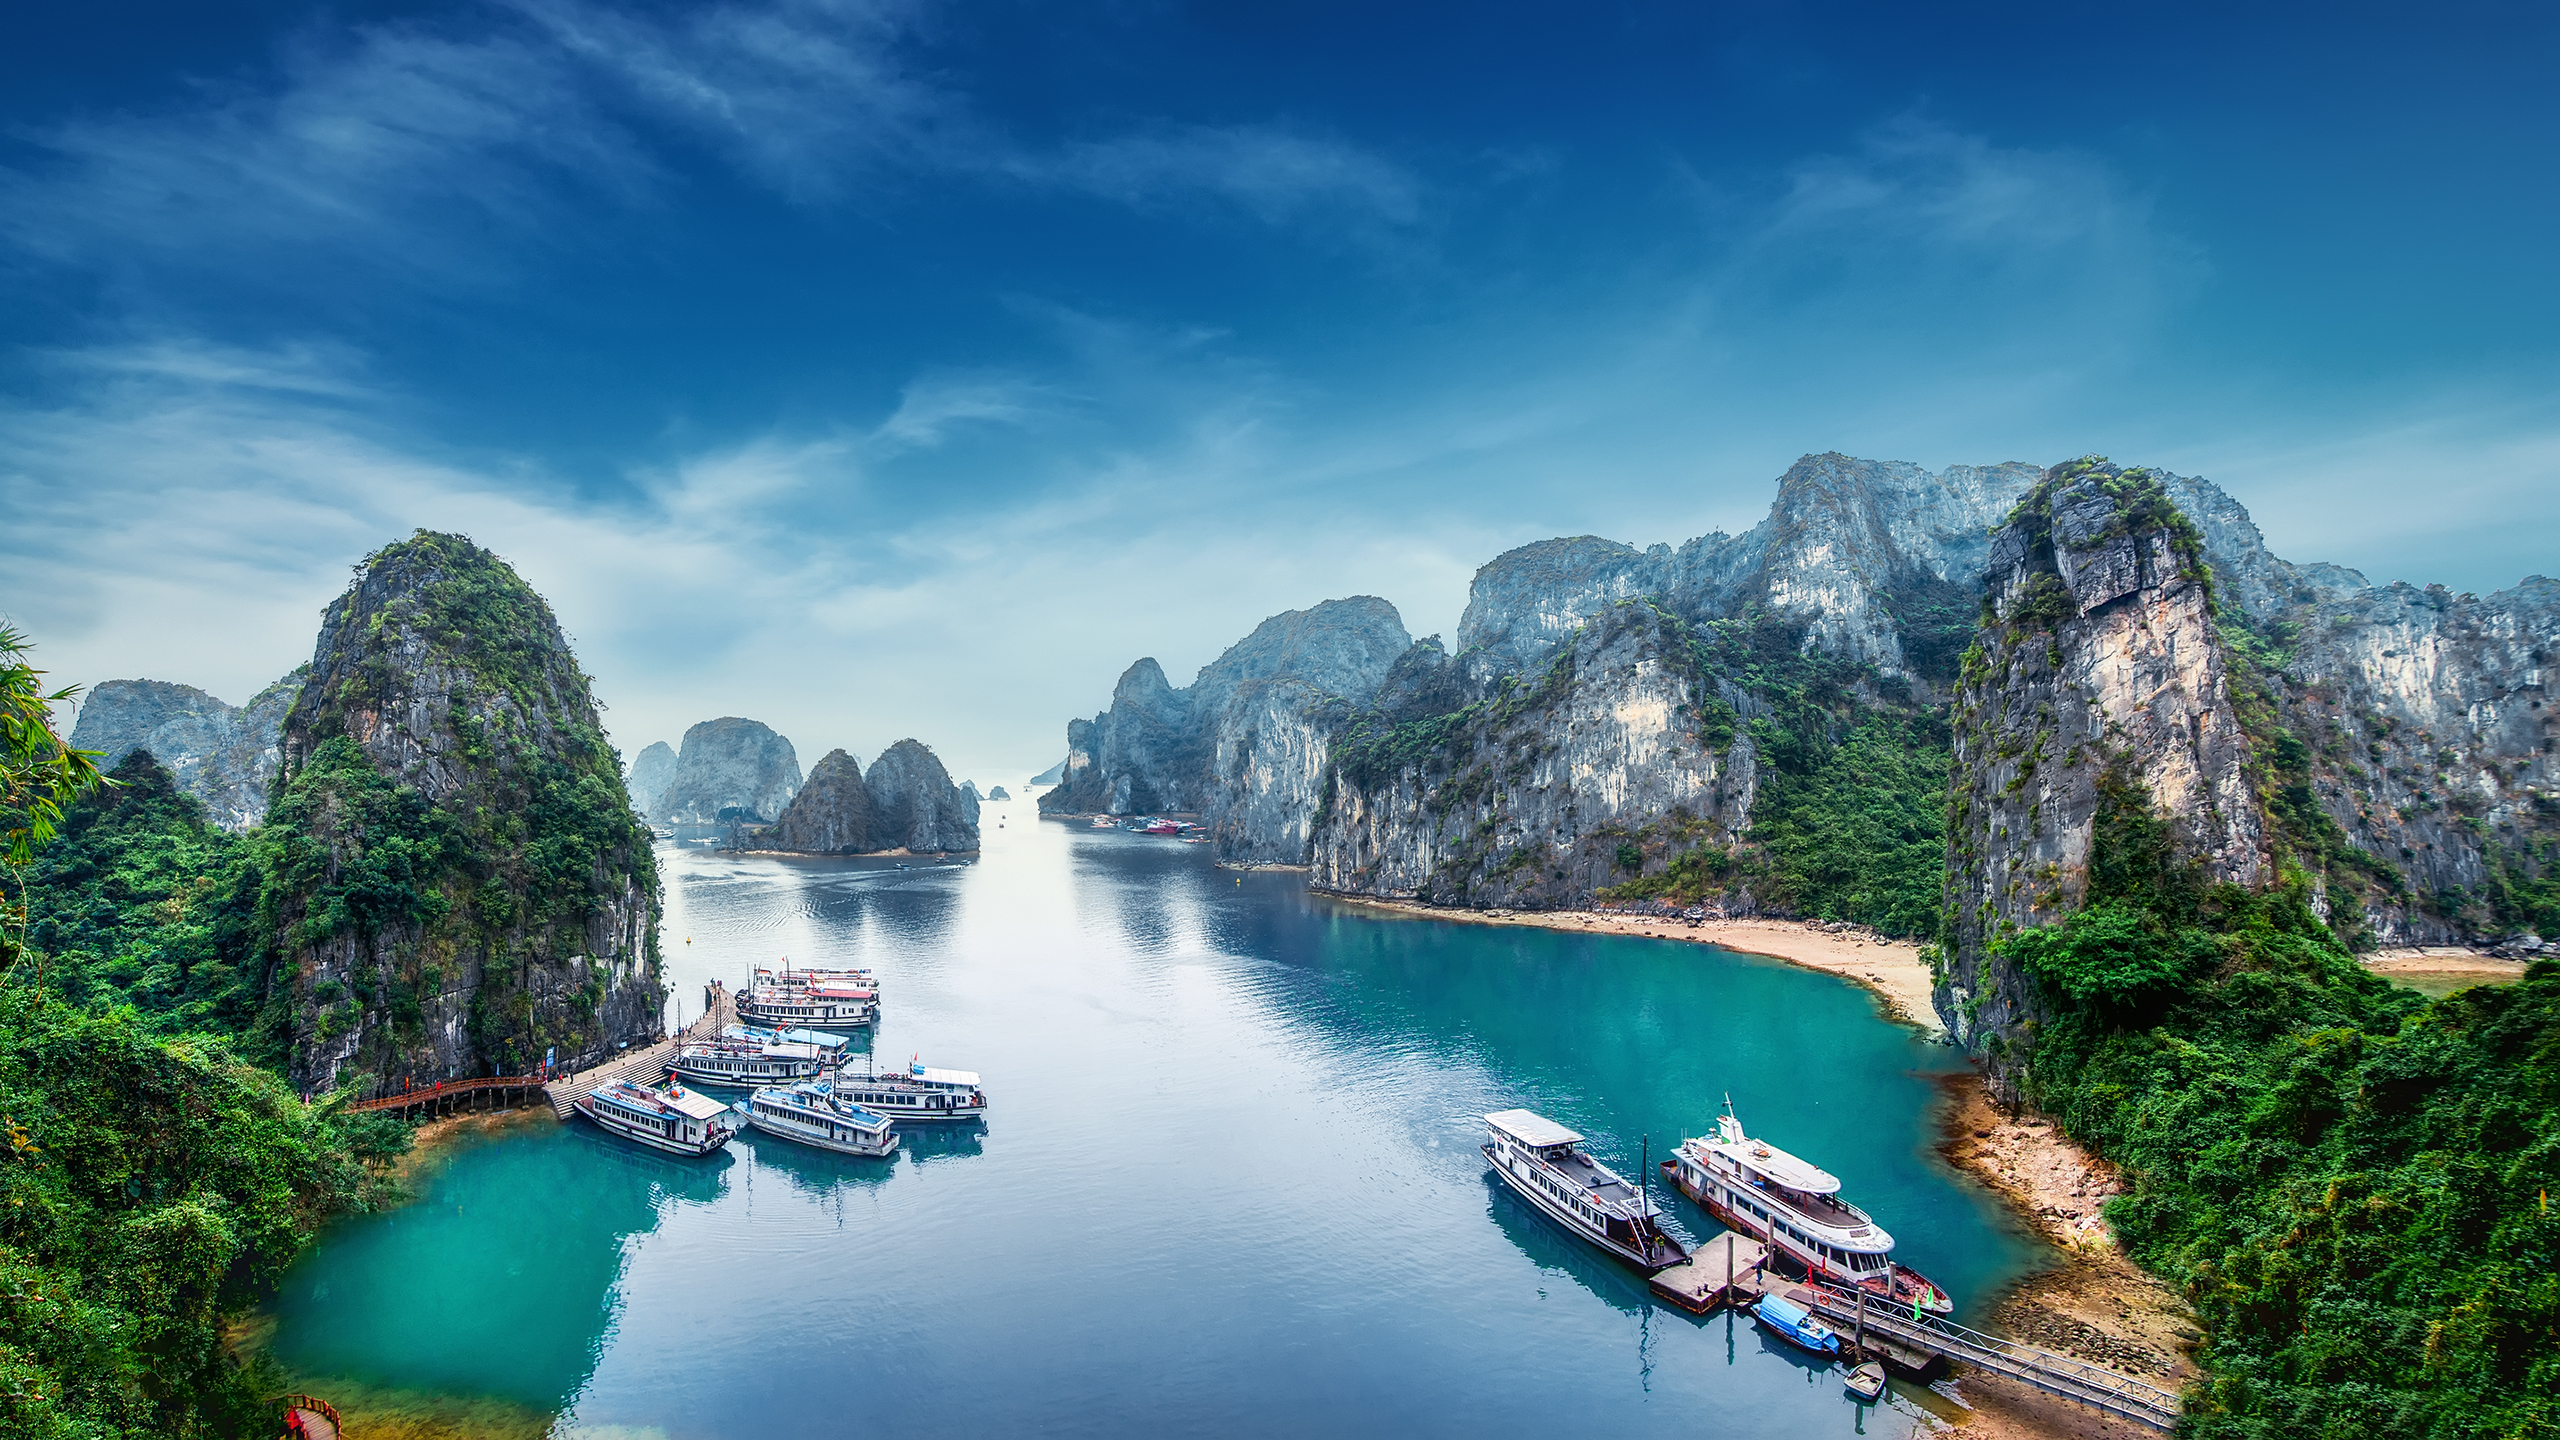 Tourist junks floating among limestone rocks at Ha Long Bay, South China Sea, Vietnam